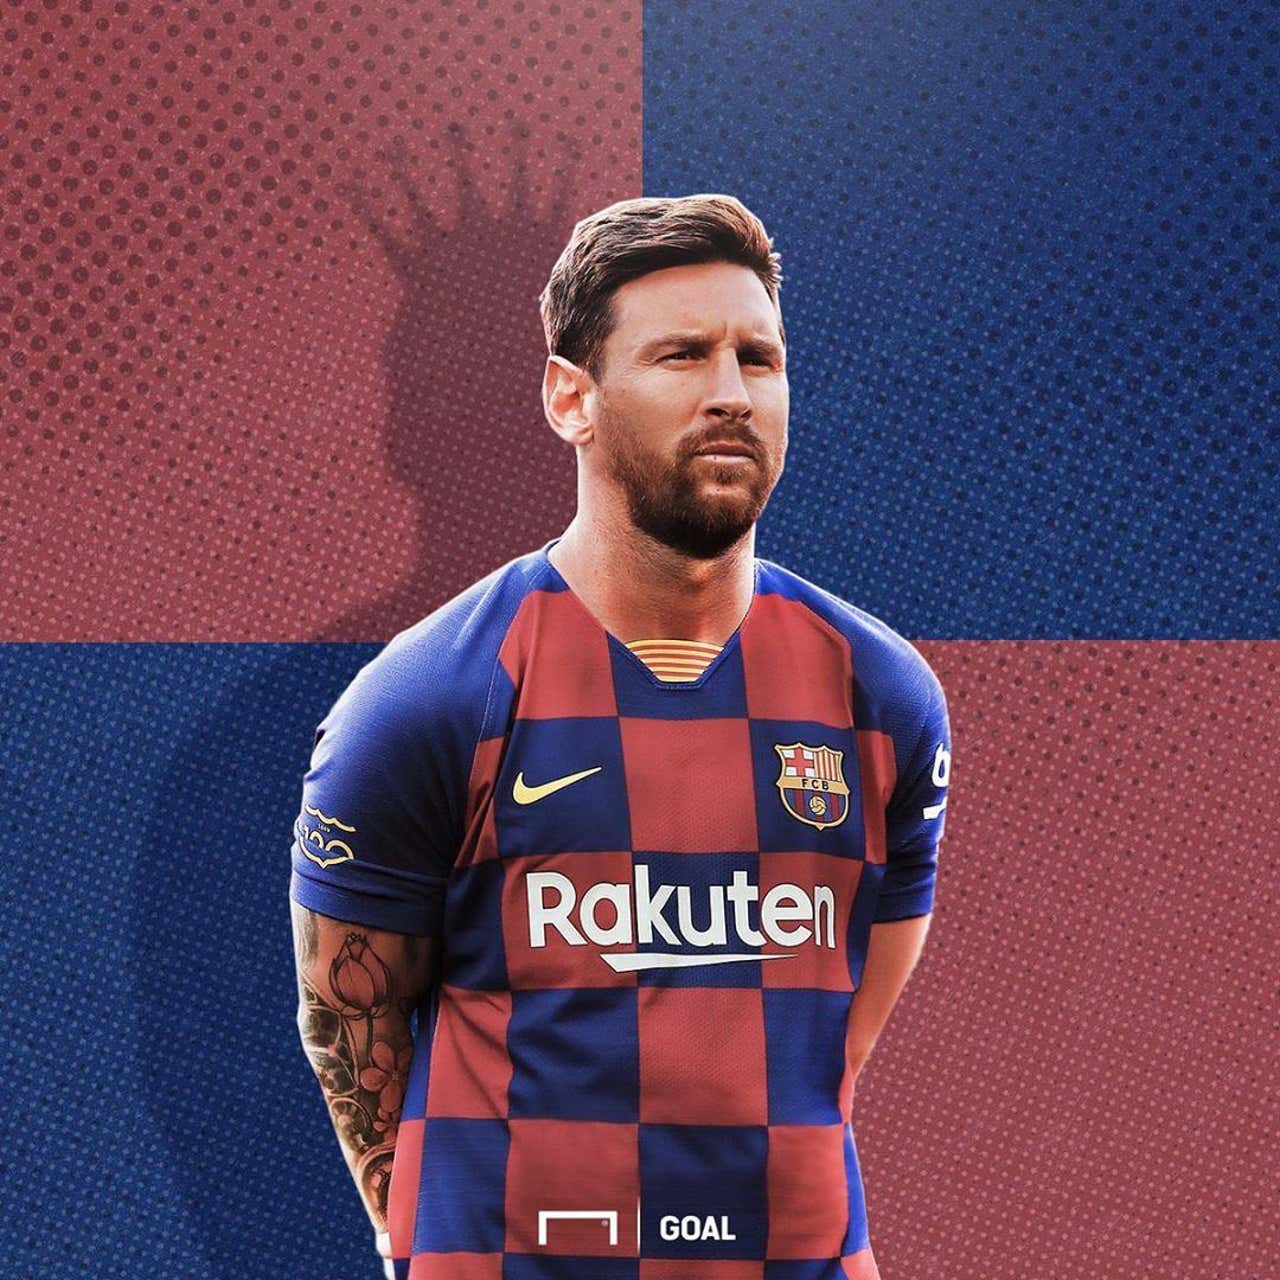 Fondos de pantalla de Messi: las mejores imágenes en Barcelona y Argentina  | Goal.com Argentina